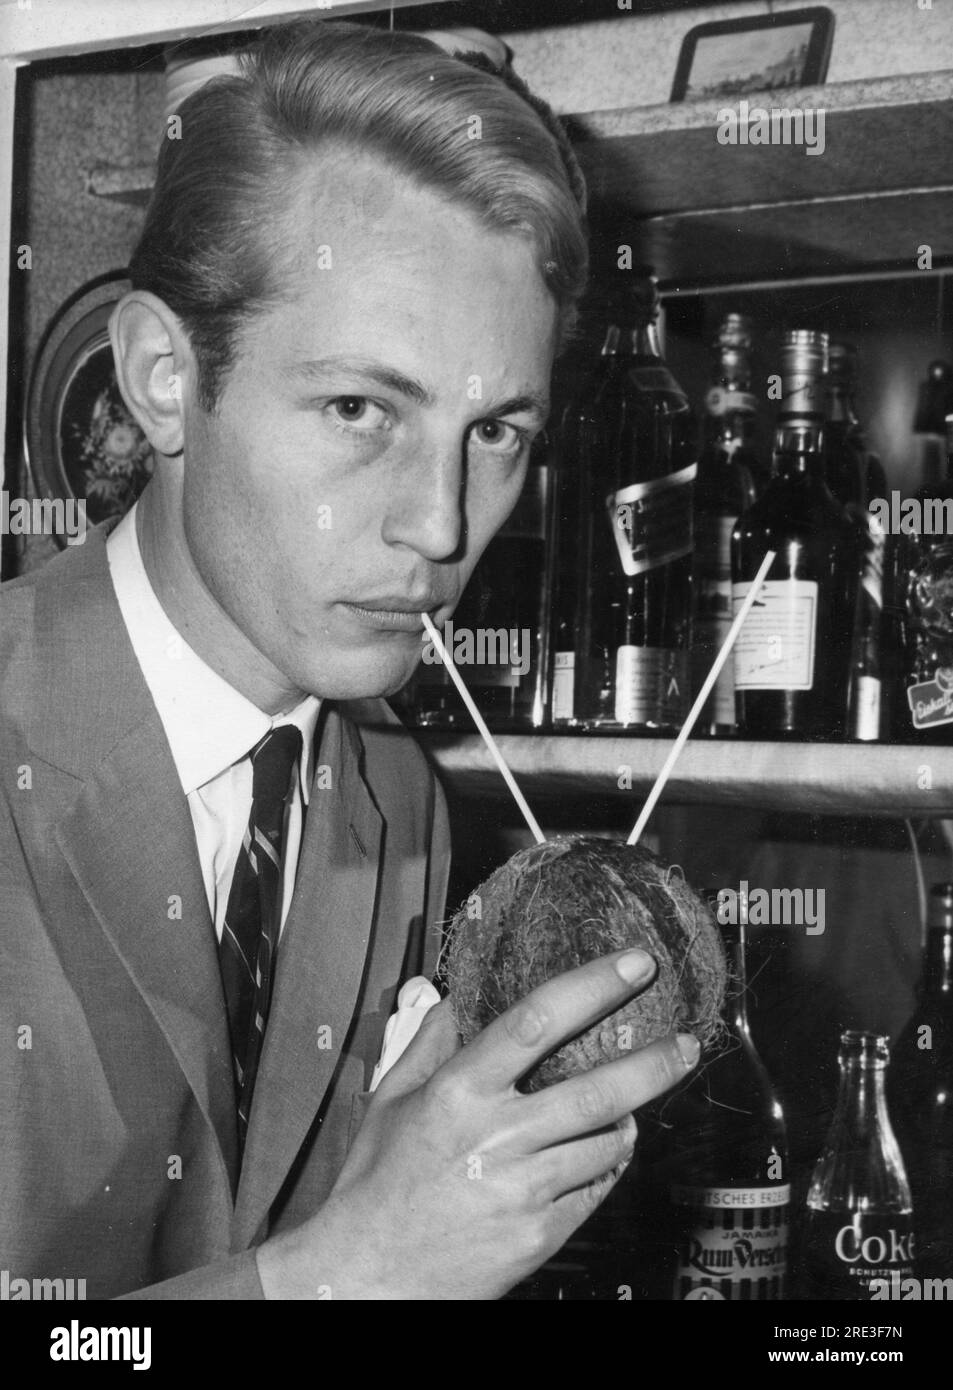 Wied, Metfried Alexander zu, * 25,4.1935, deutscher Gastronome, hinter der Bar, ADDITIONAL-RIGHTS-CLEARANCE-INFO-NOT-AVAILABLE Stockfoto